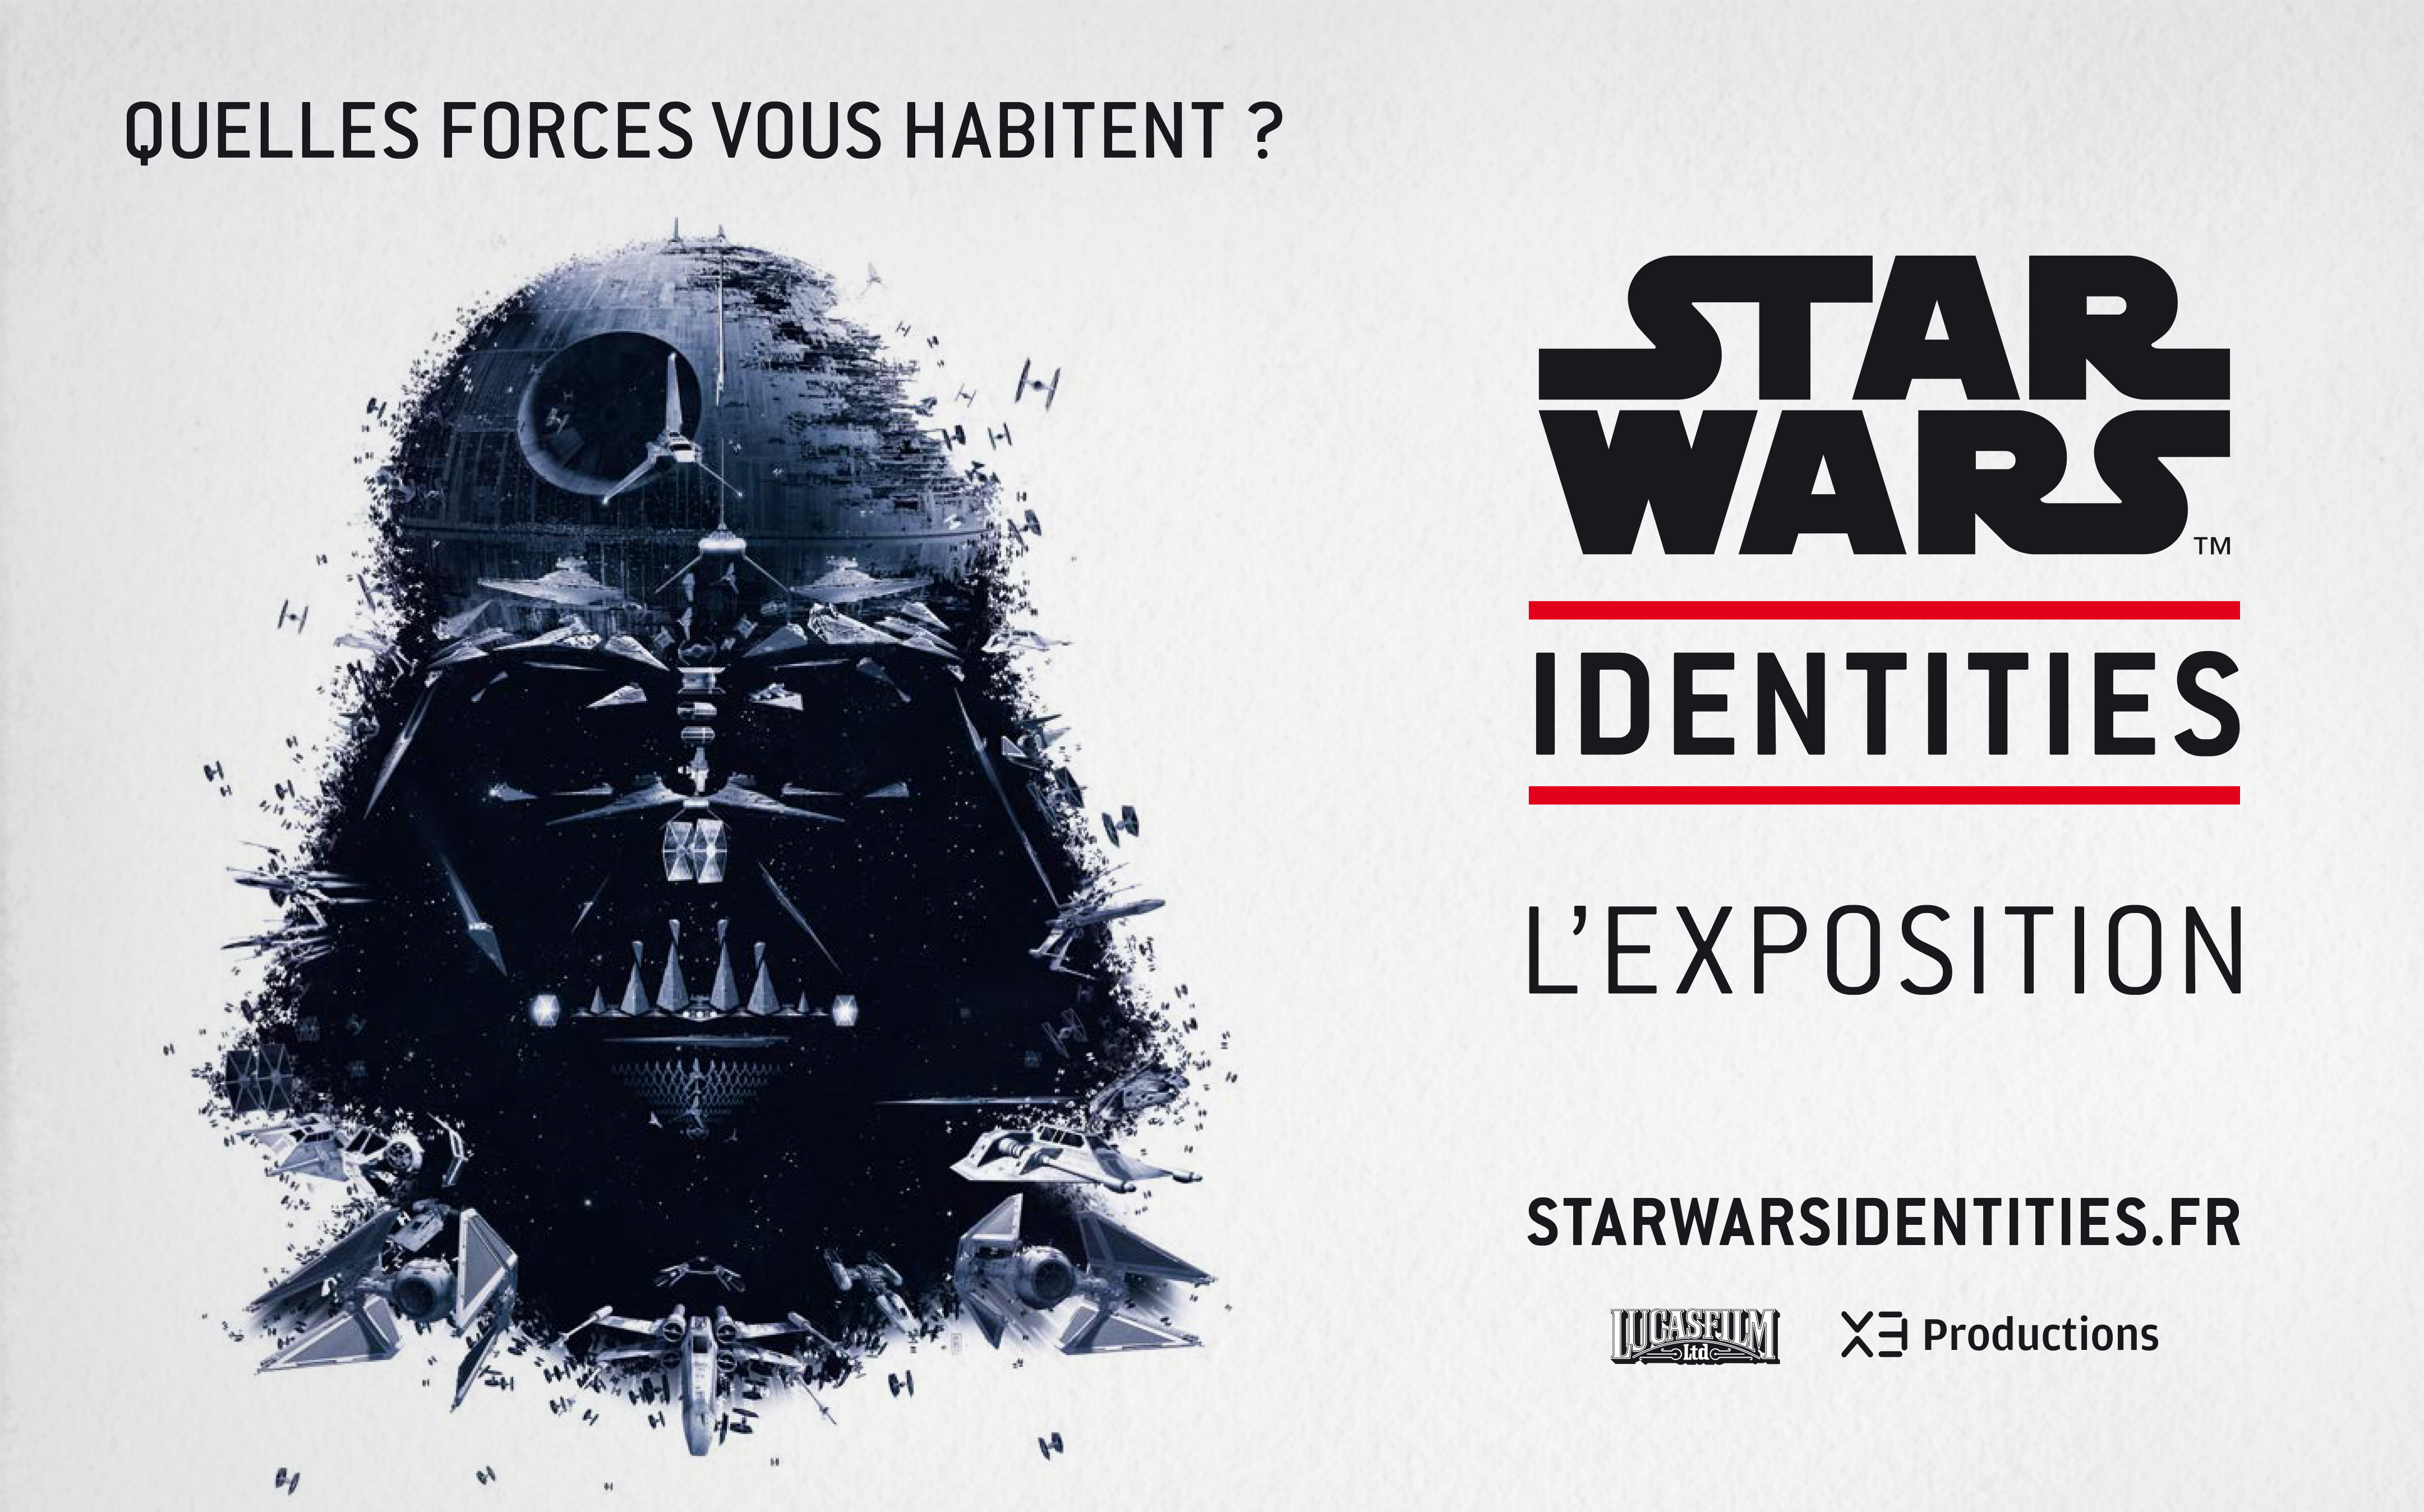 Star Wars Identities Bruxelles